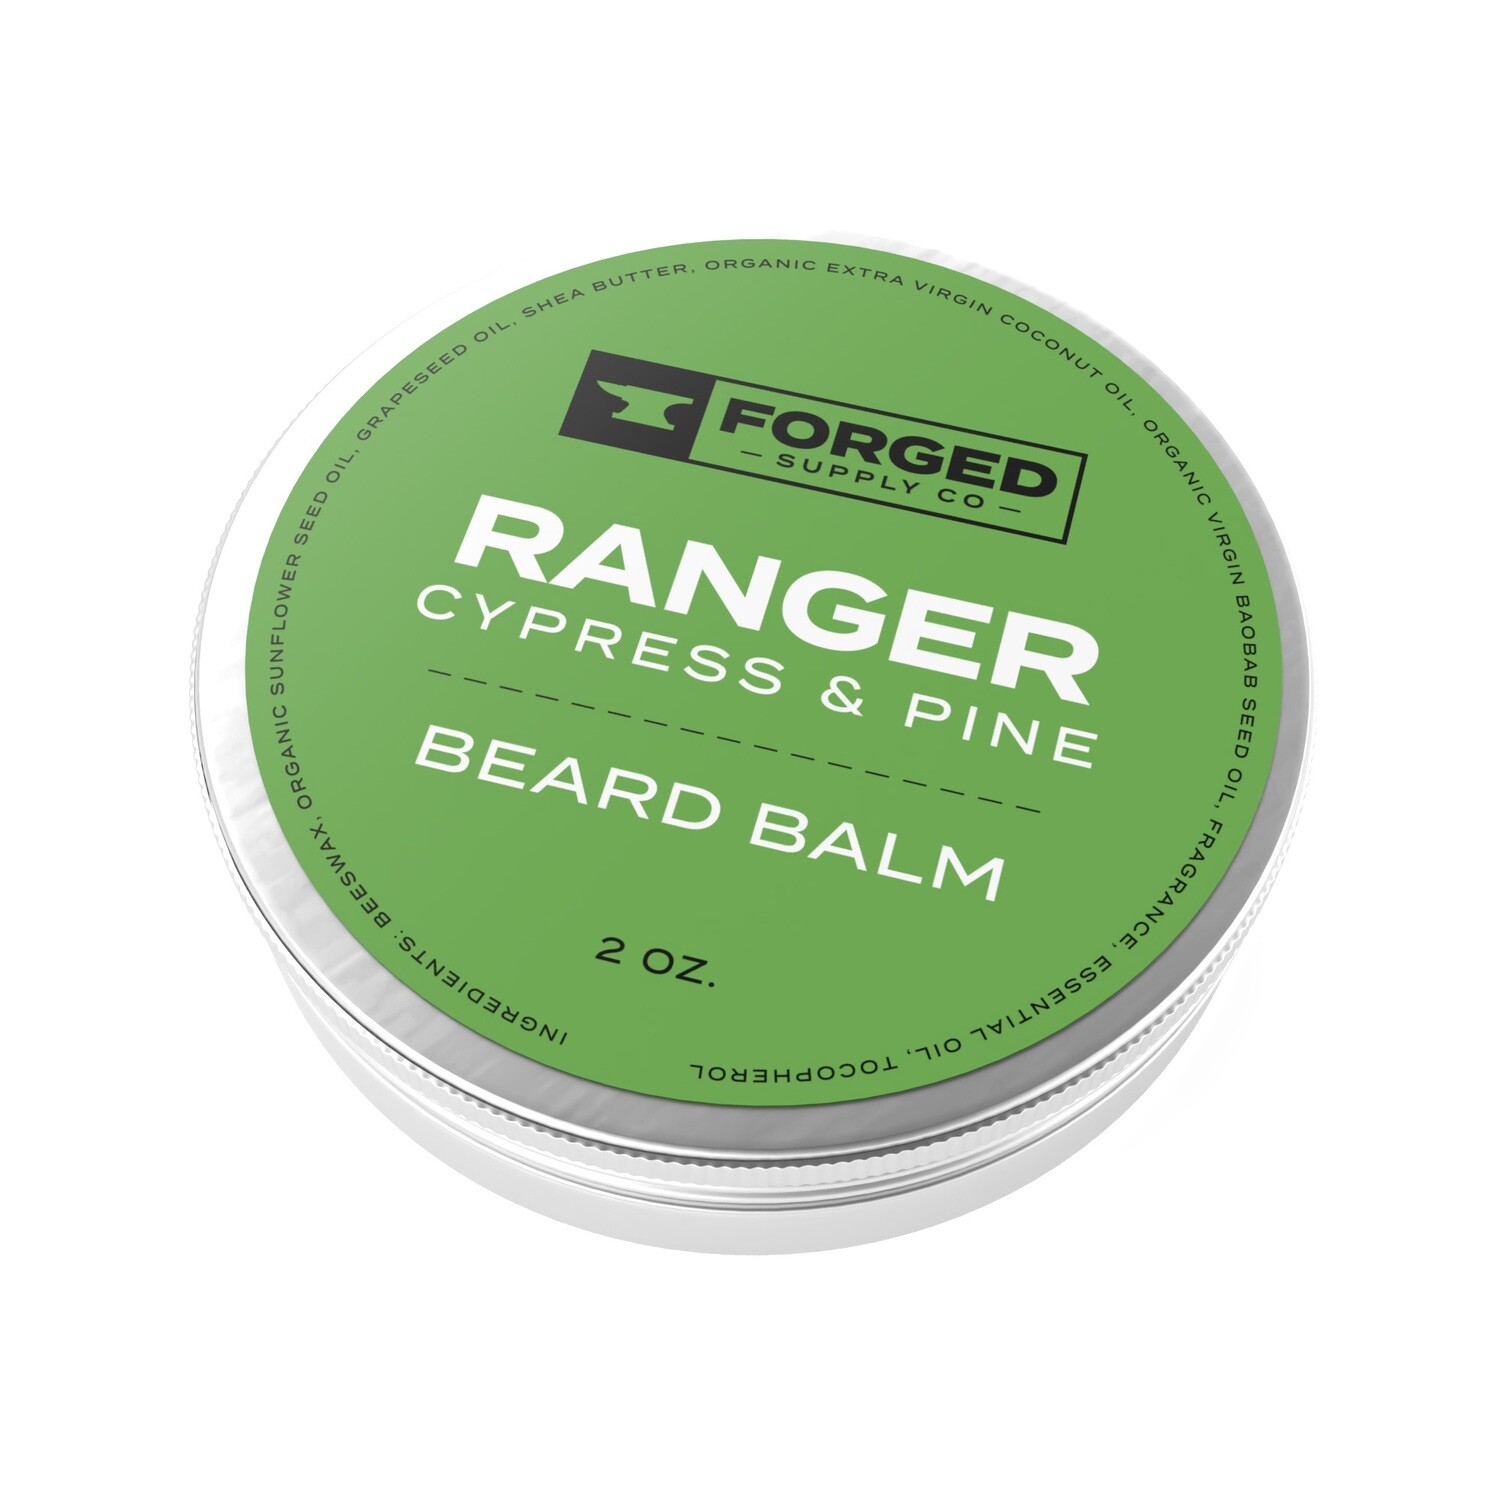 Ranger Beard Balm